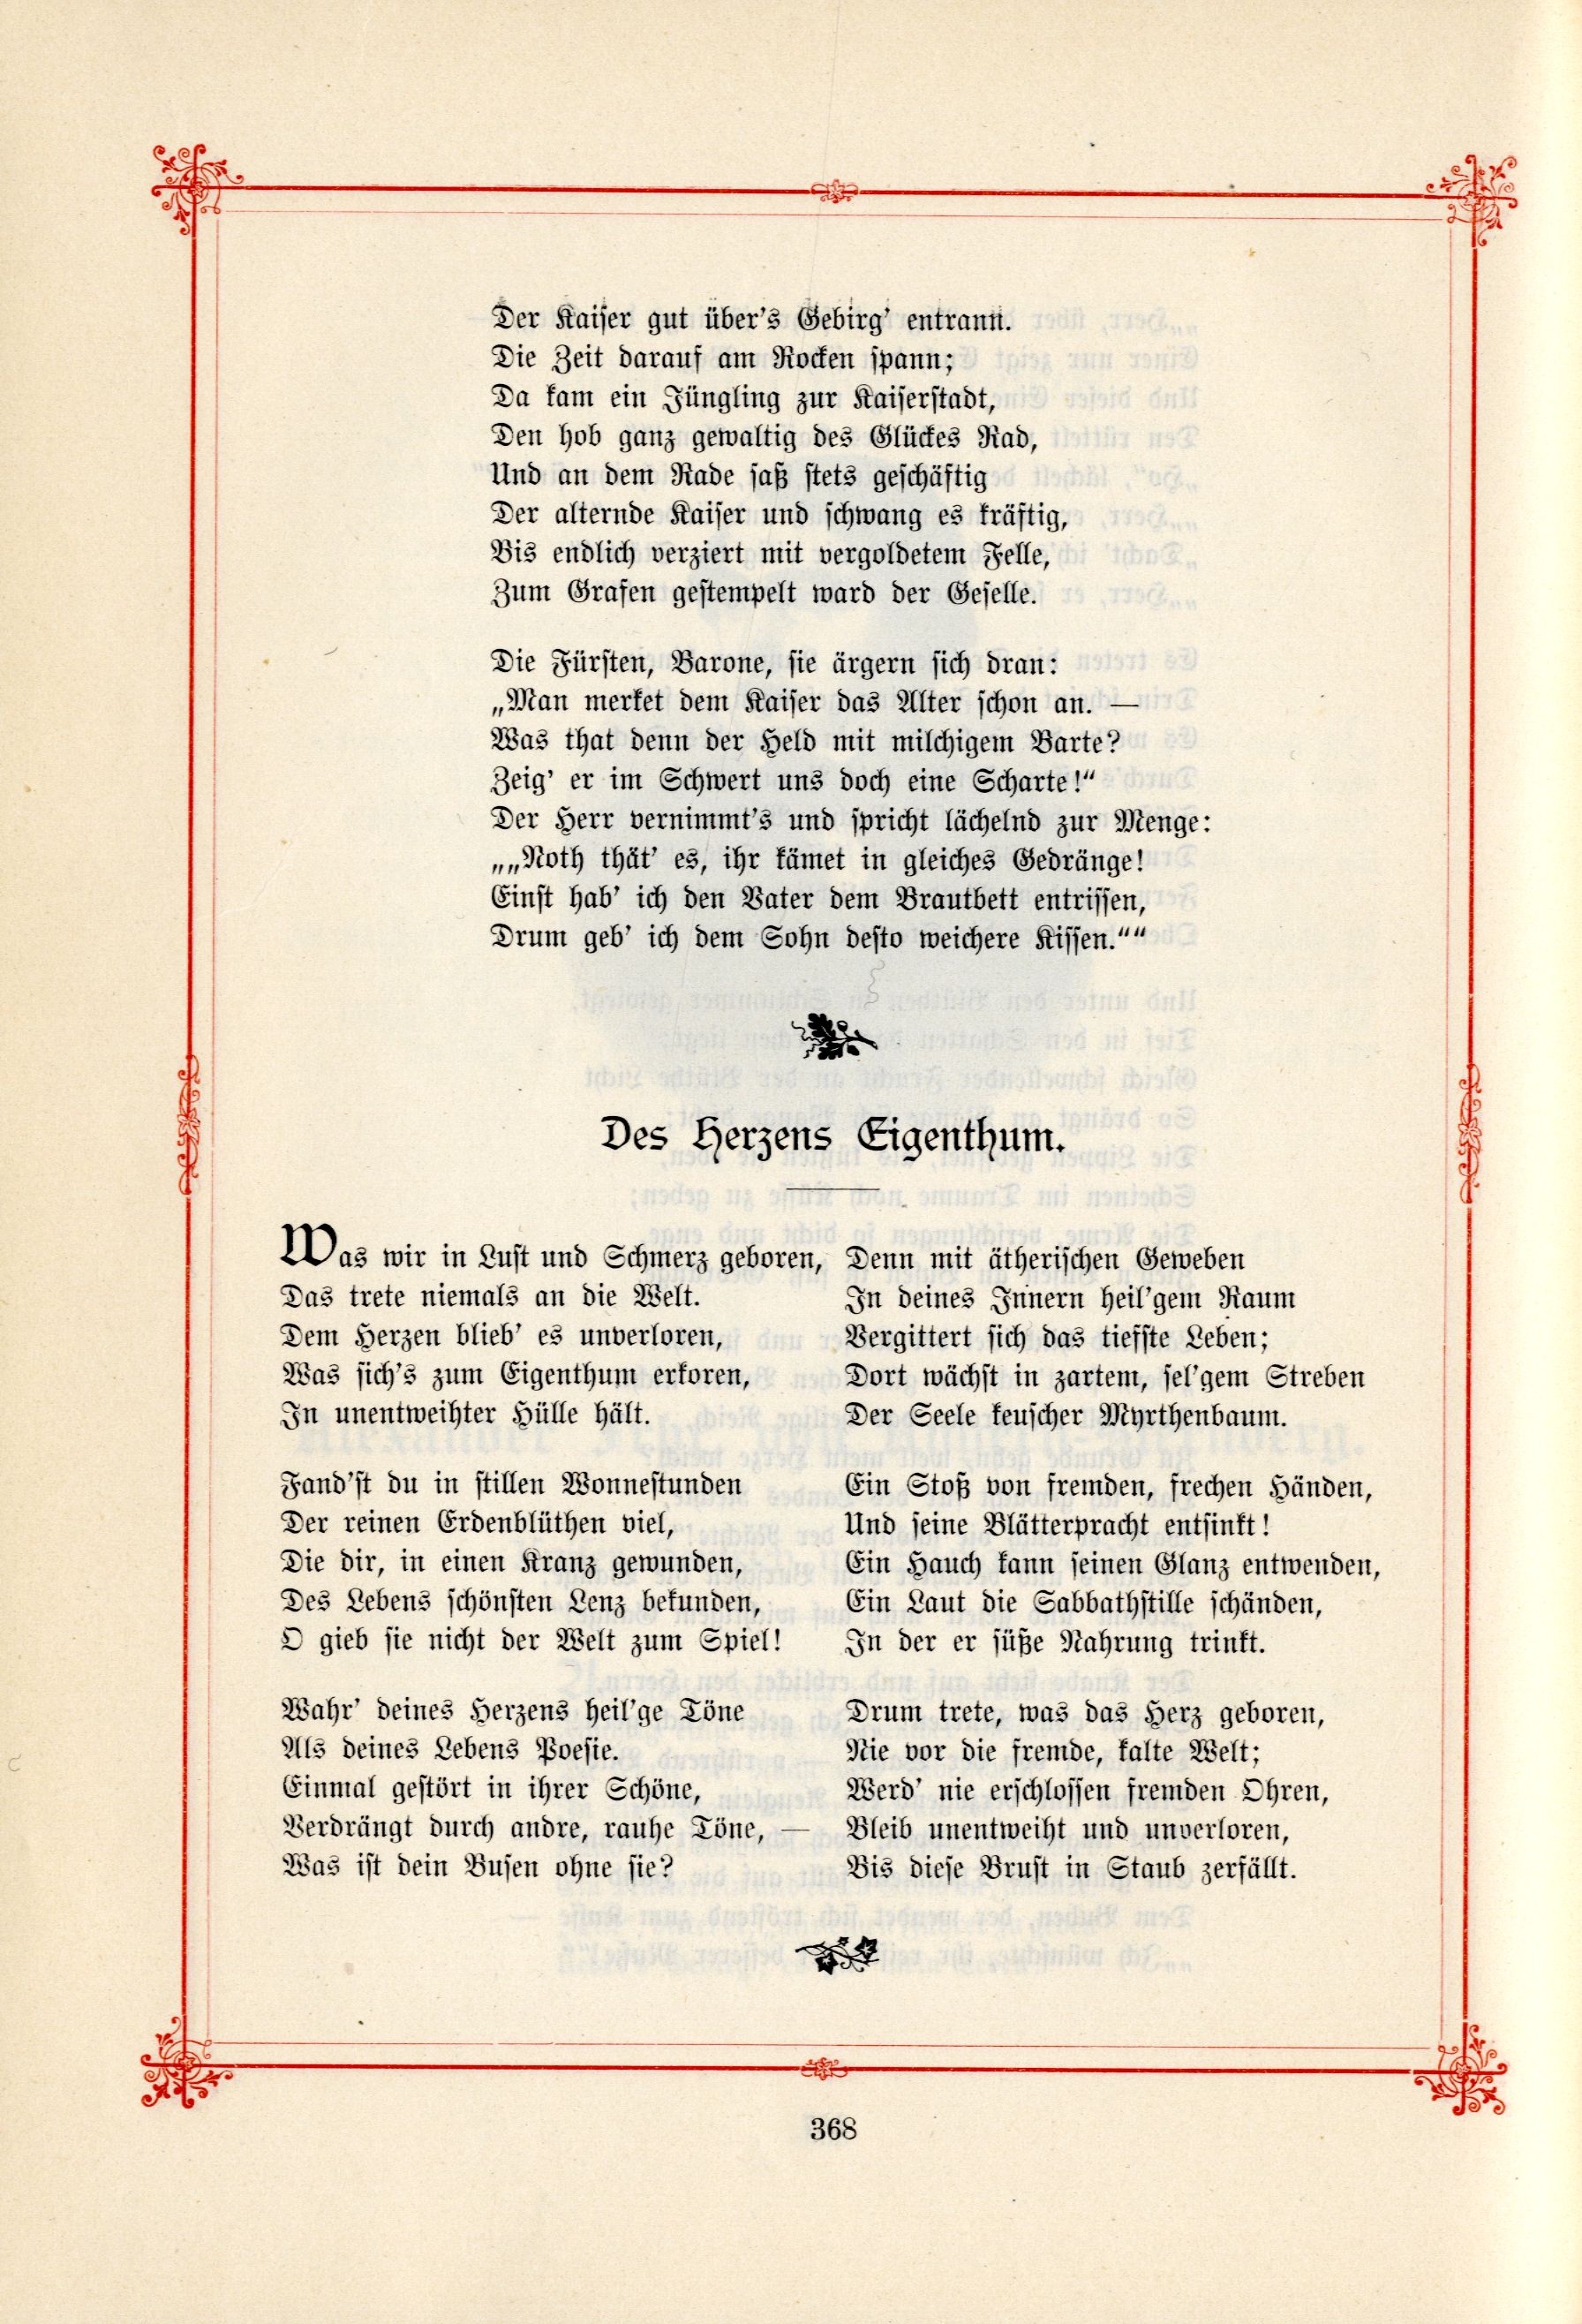 Des Herzens Eigenthum (1895) | 1. (368) Haupttext